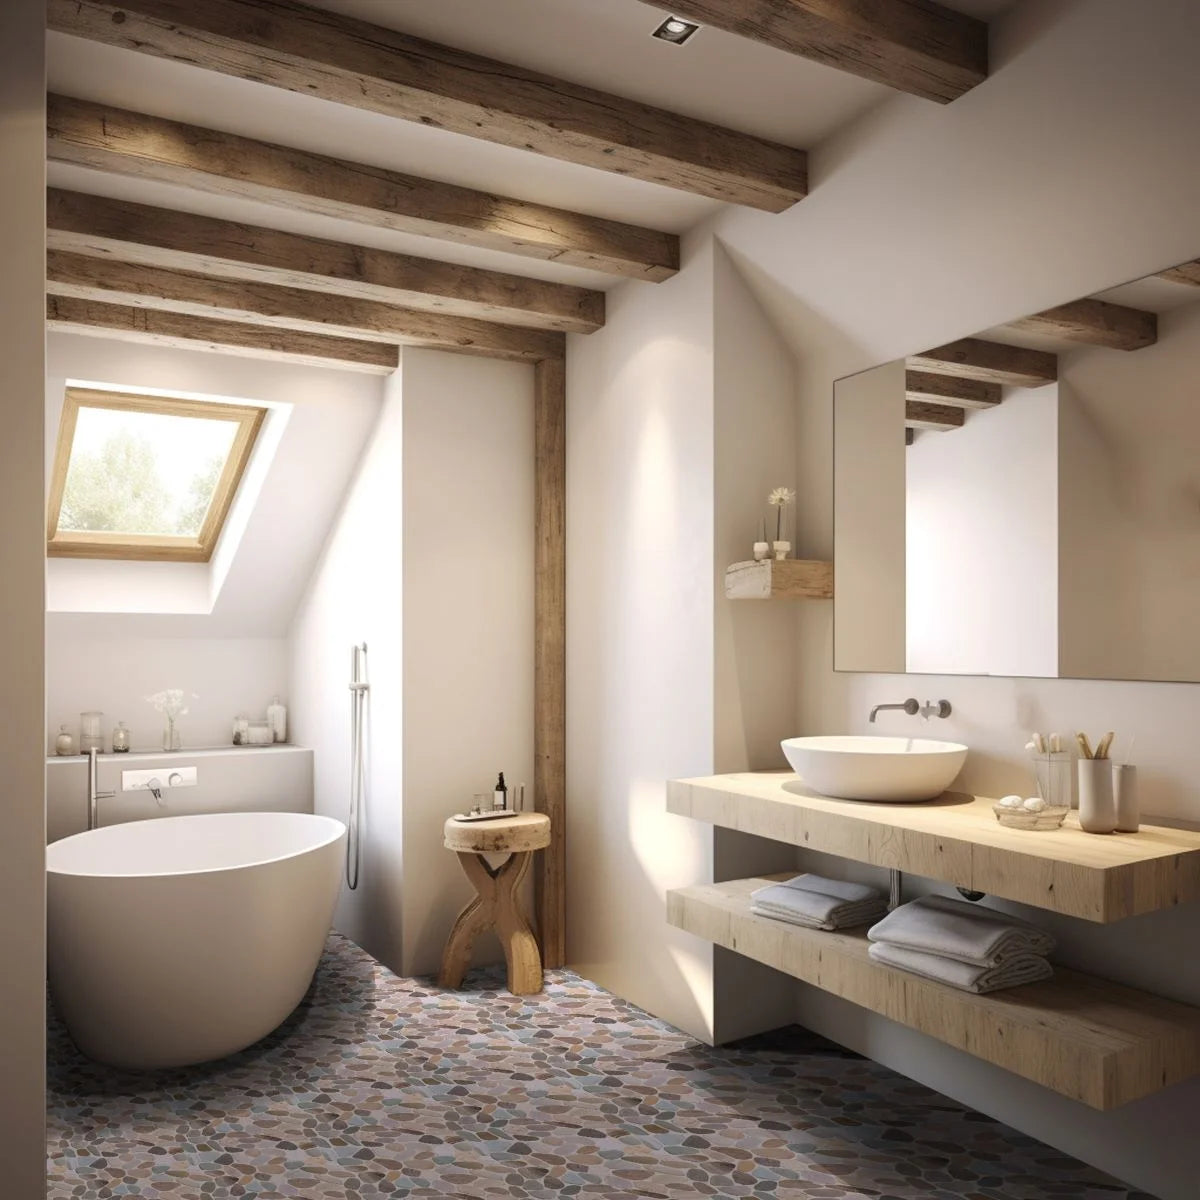 Olive sliced pebble tile flooring in a wood aesthetic bathroom